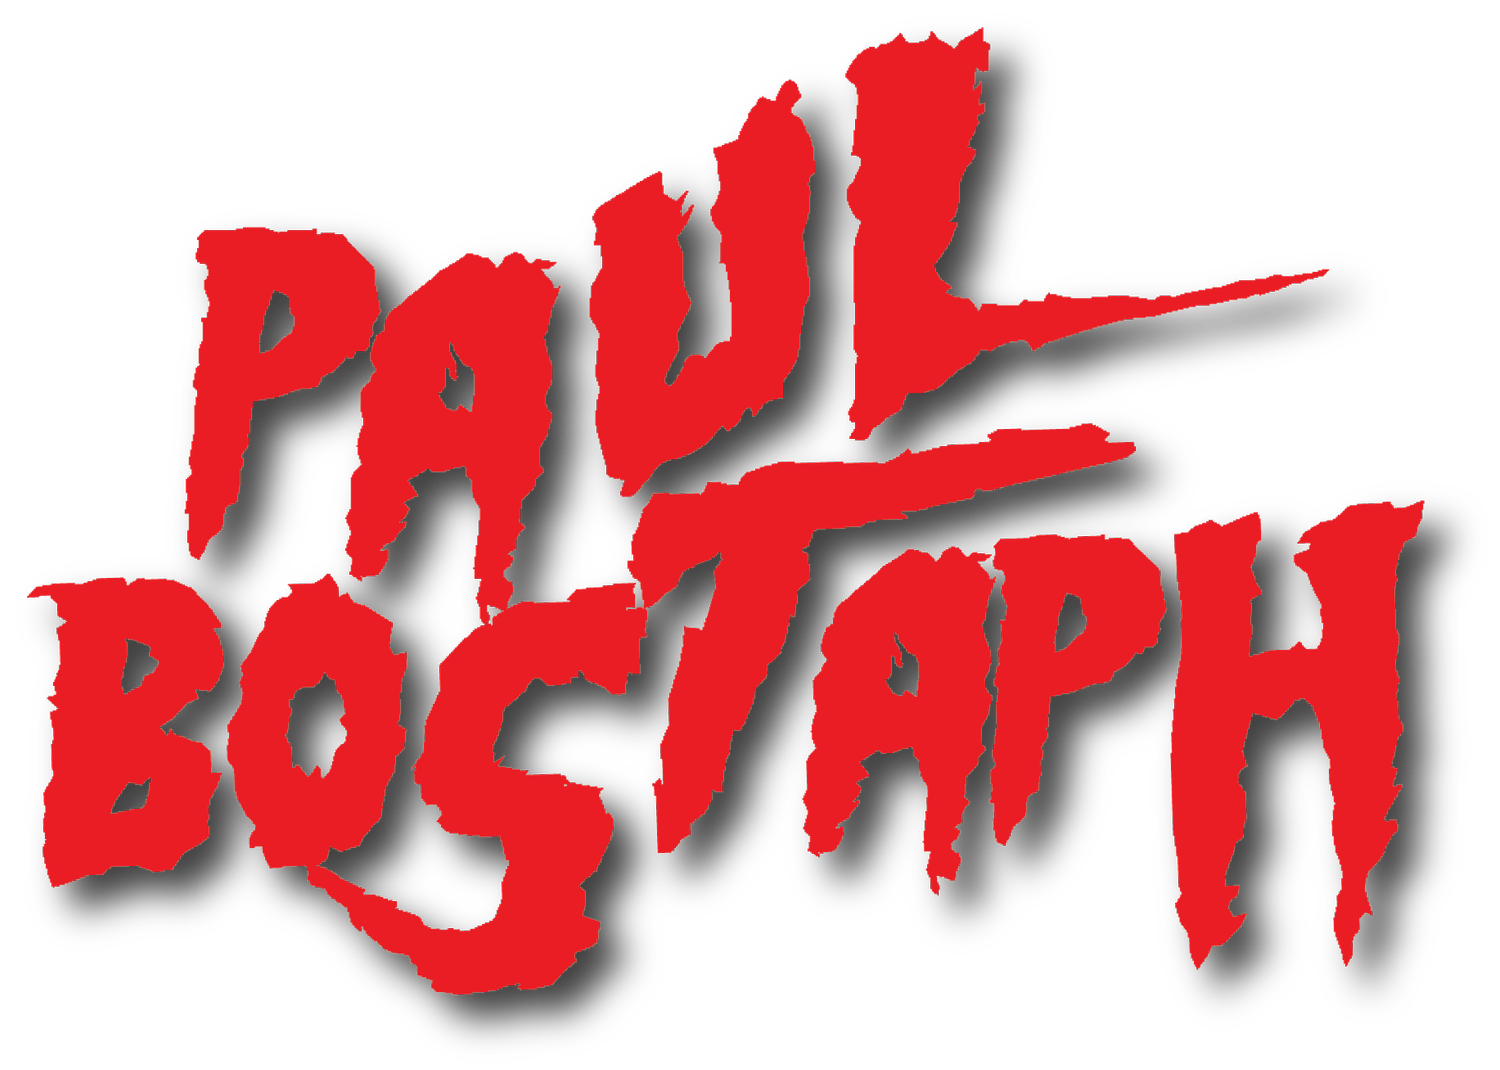 PAUL BOSTAPH | The Official Website